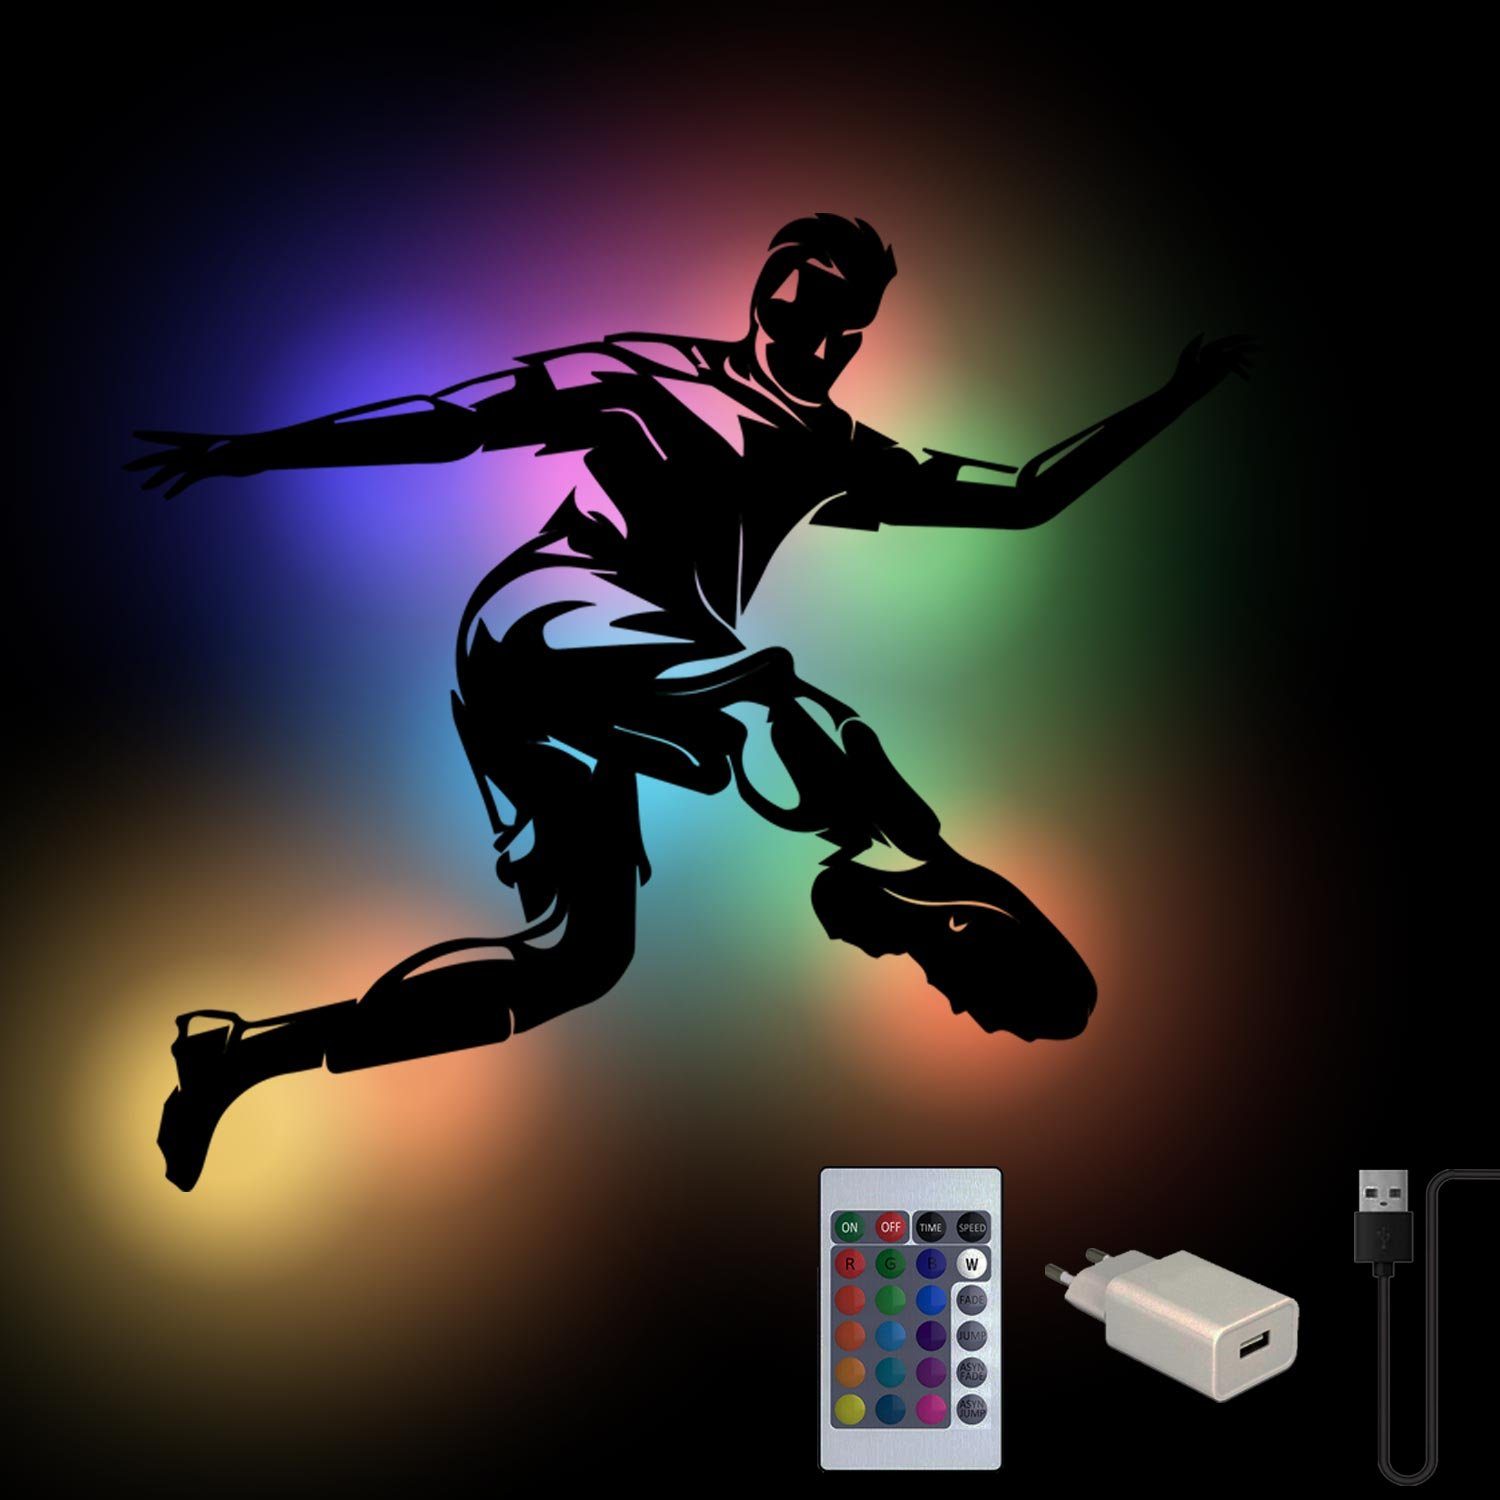 RGB LED integriert, Dekolicht Farbwechsel fest Braun Deko Farbwechsel, LED Fußball Namofactur Wand Kicker,